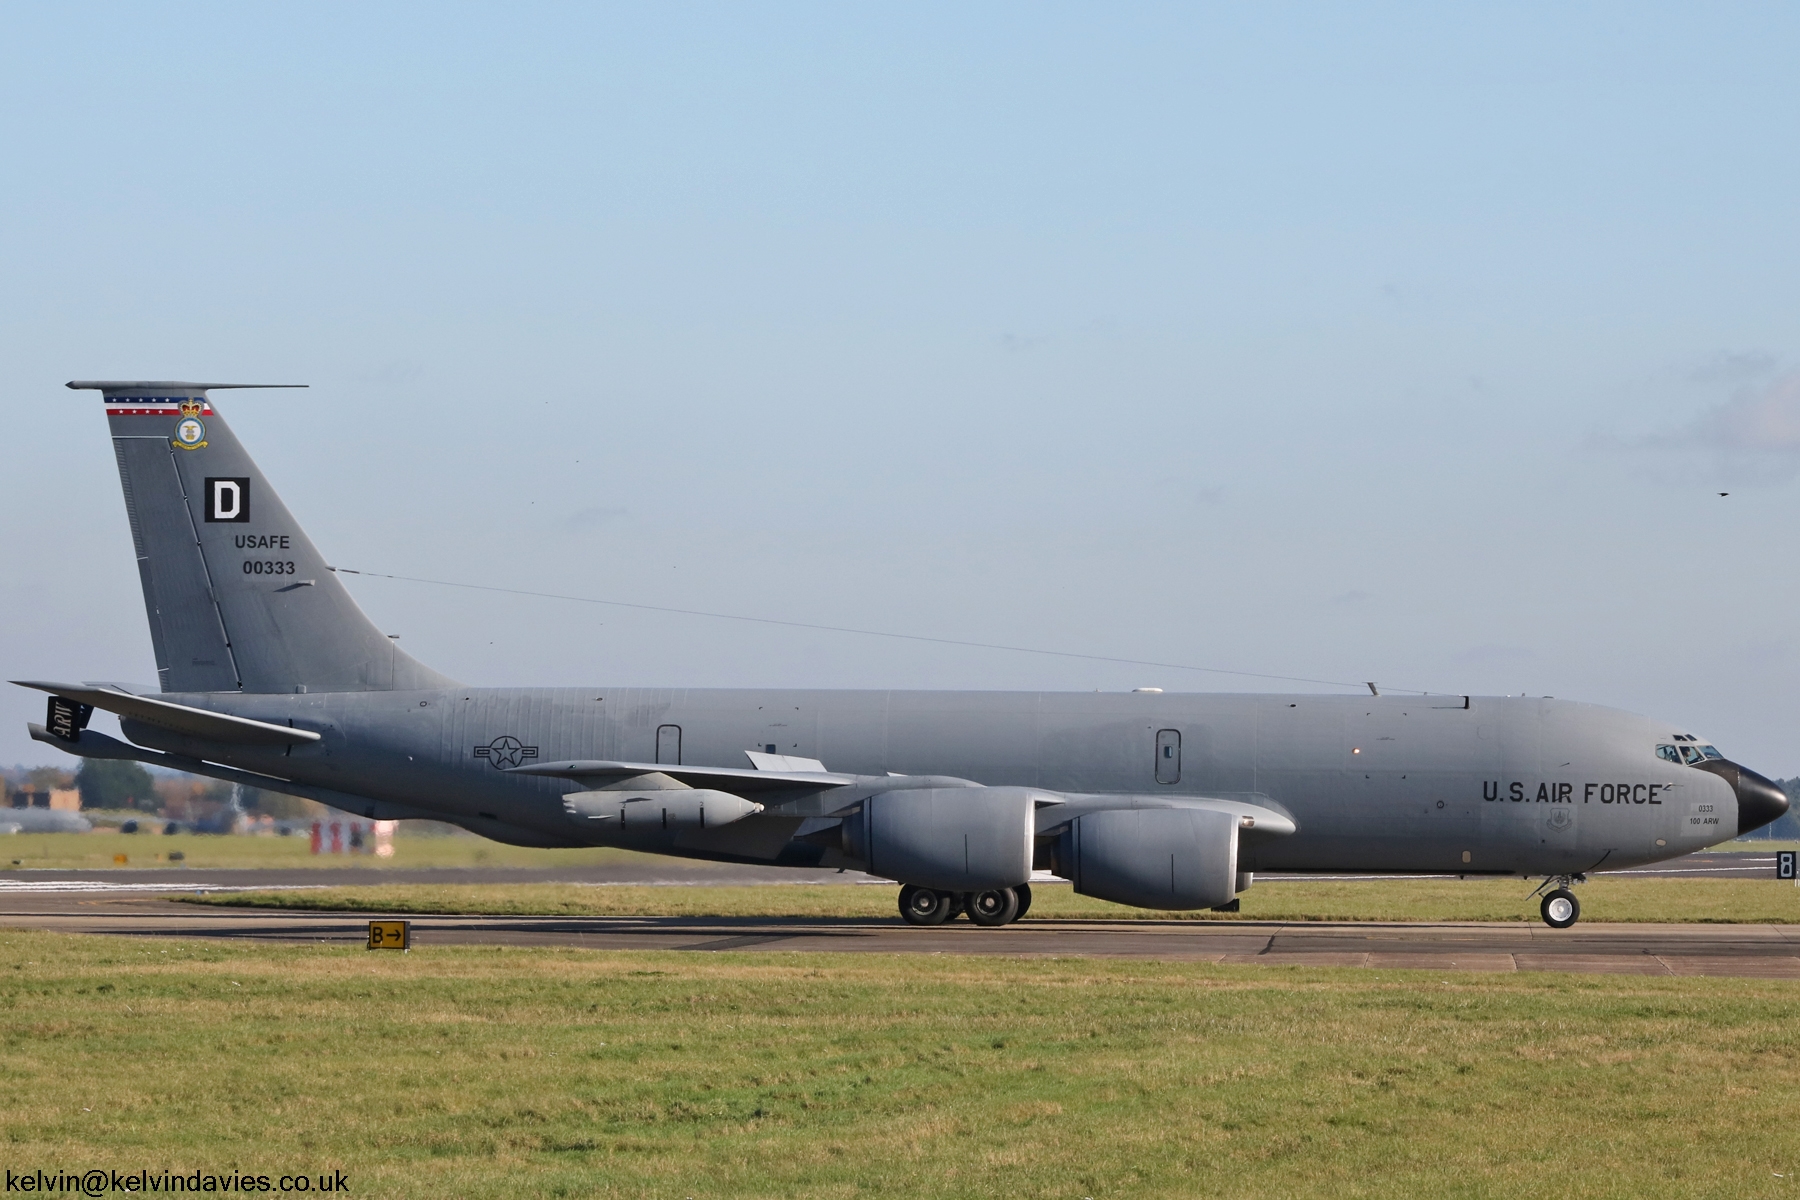 US Air Force KC-135R 60-0333